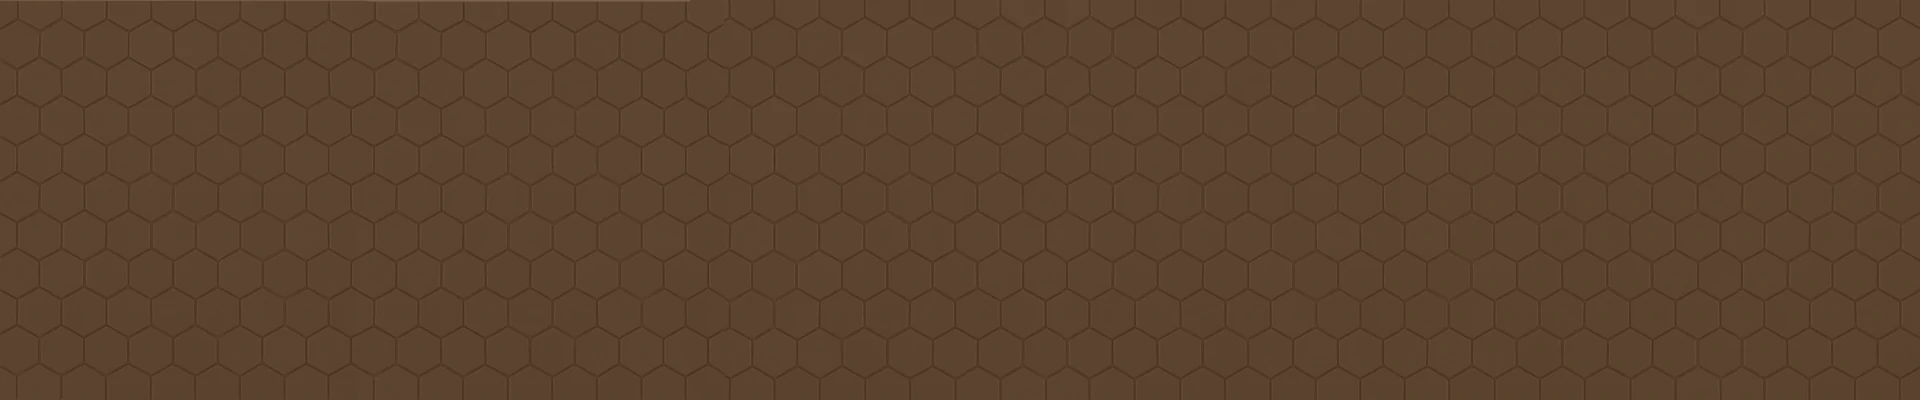 gresite hexagonal para piscina marron